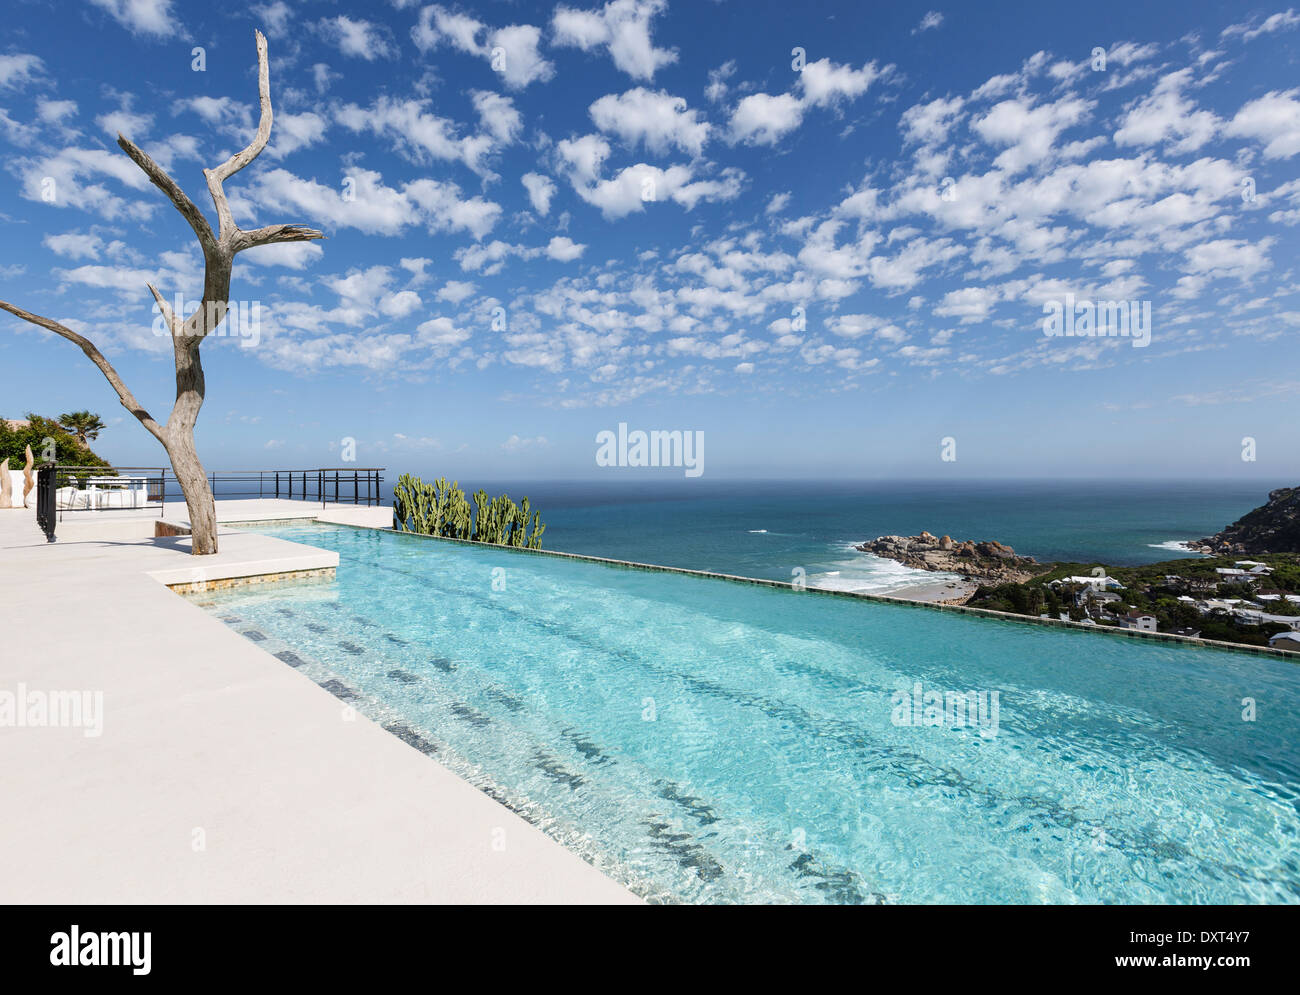 Clouds in blue sky over luxury lap pool overlooking ocean Stock Photo